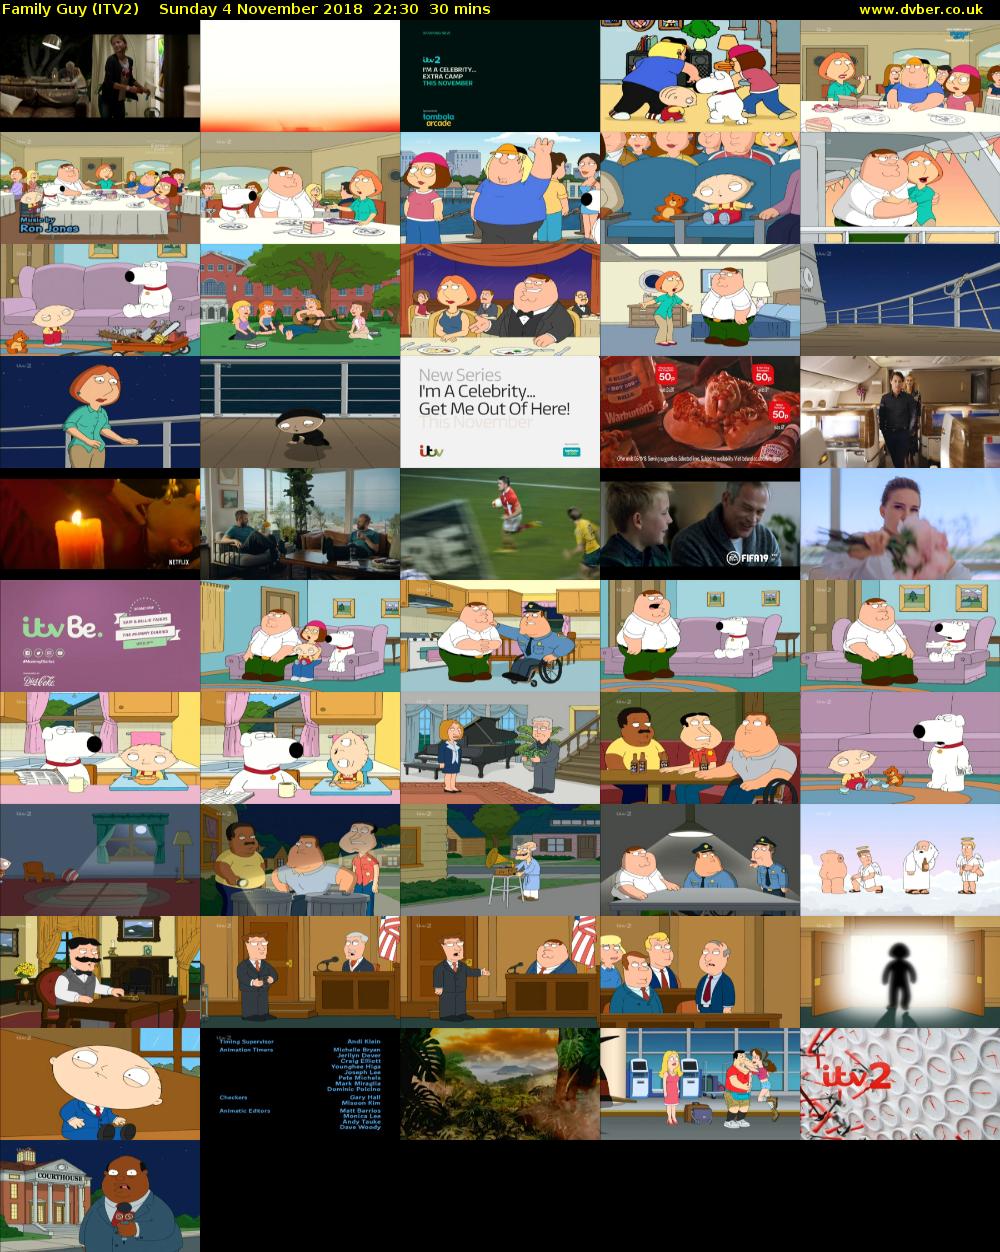 Family Guy (ITV2) Sunday 4 November 2018 22:30 - 23:00